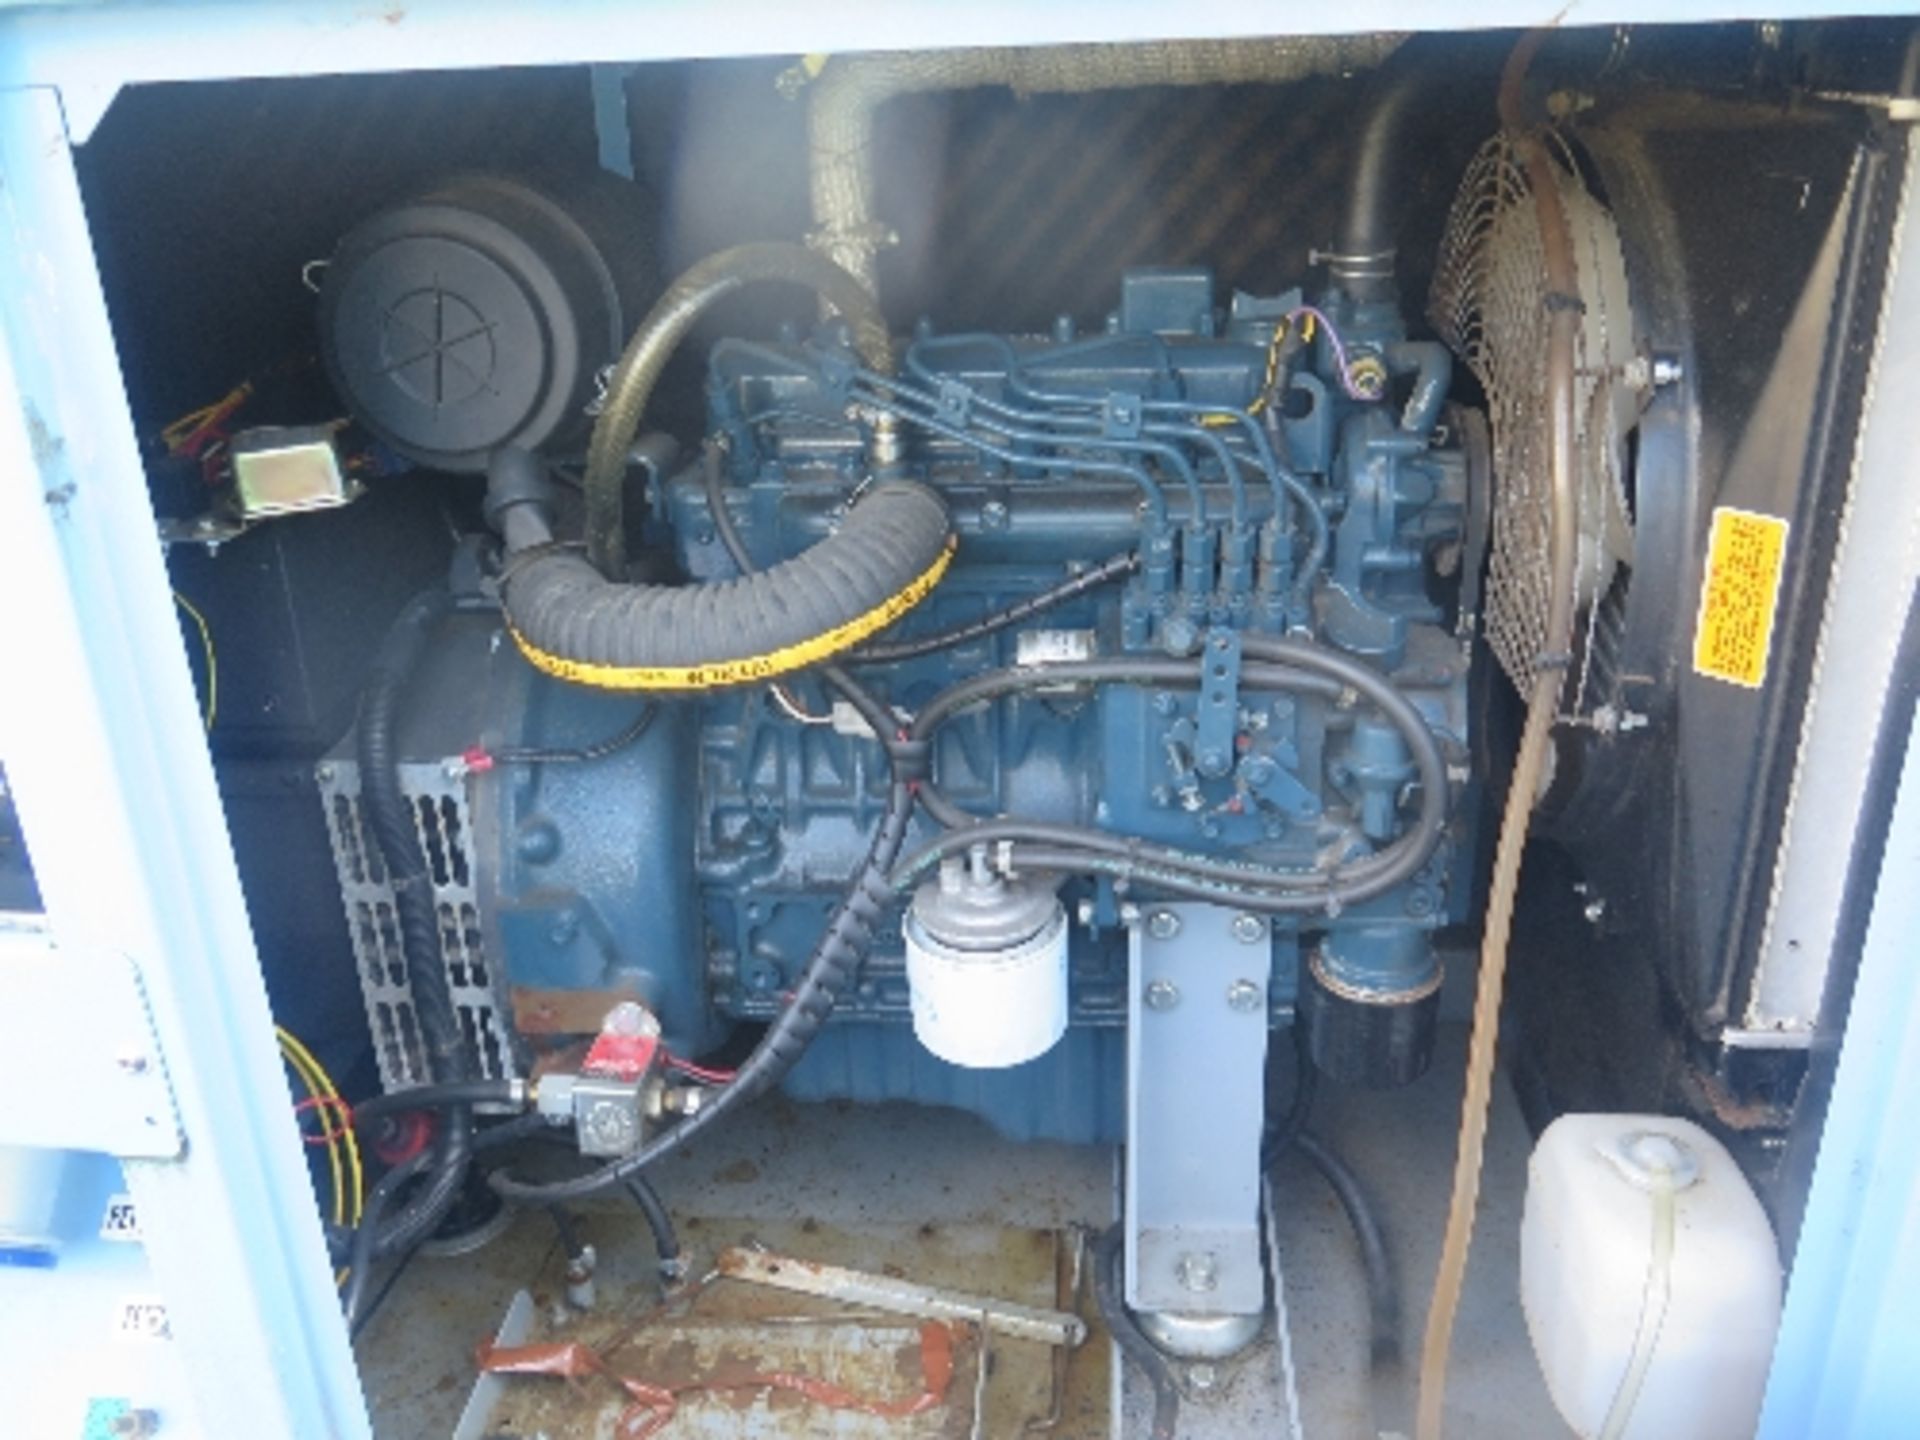 Sutton 11kva generator, s/n 13500-1 - Image 2 of 3